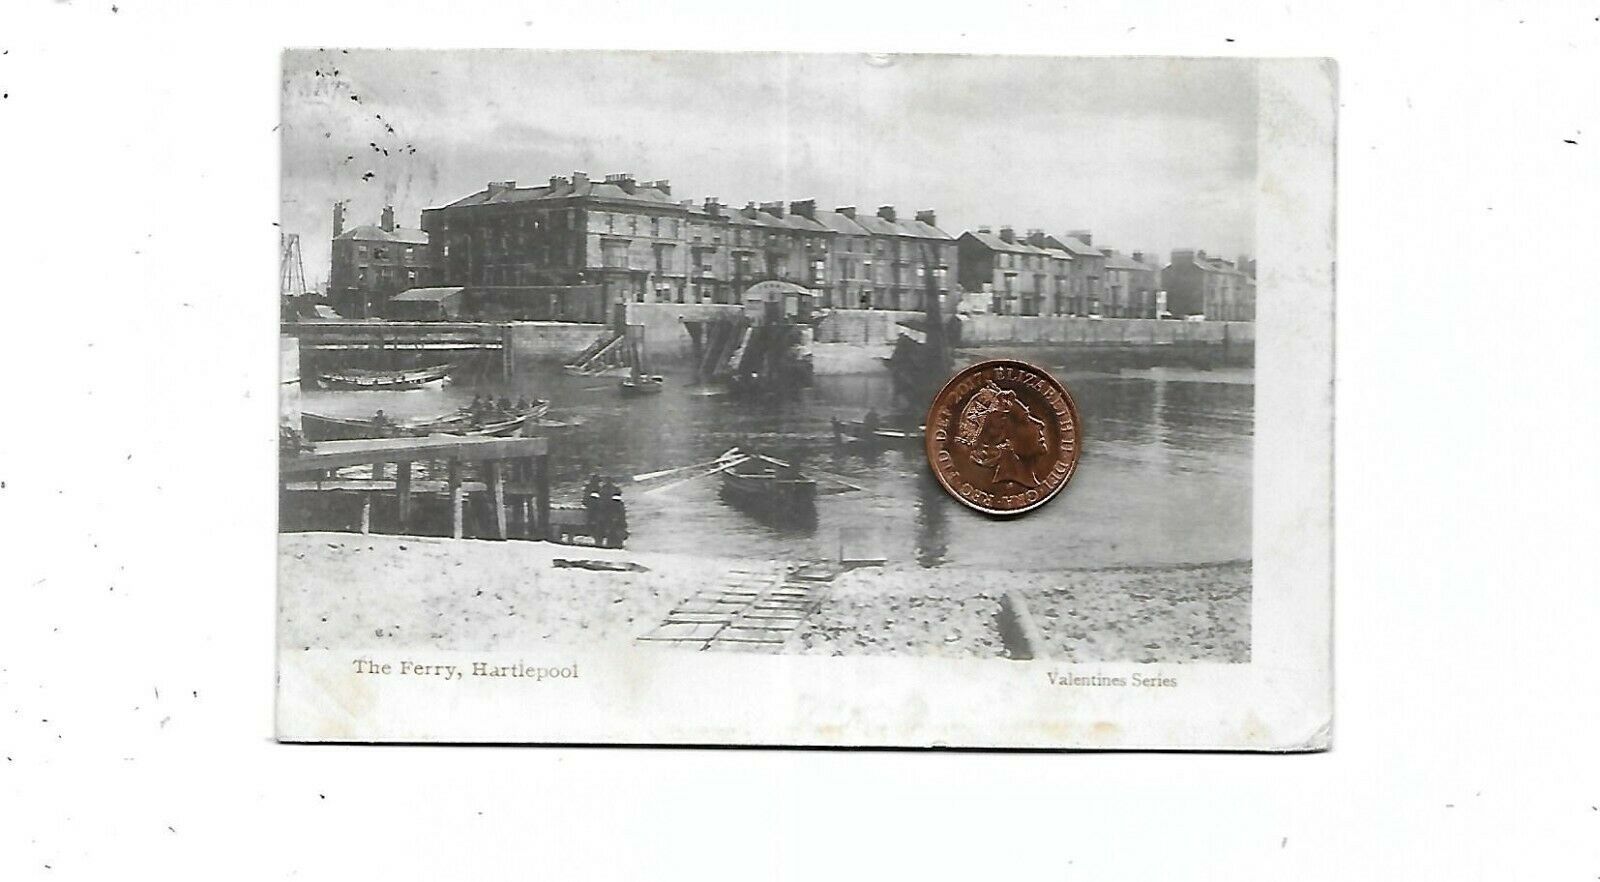 House Clearance - HARTLEPOOL The Ferry early Durham Service 1904 Postmark